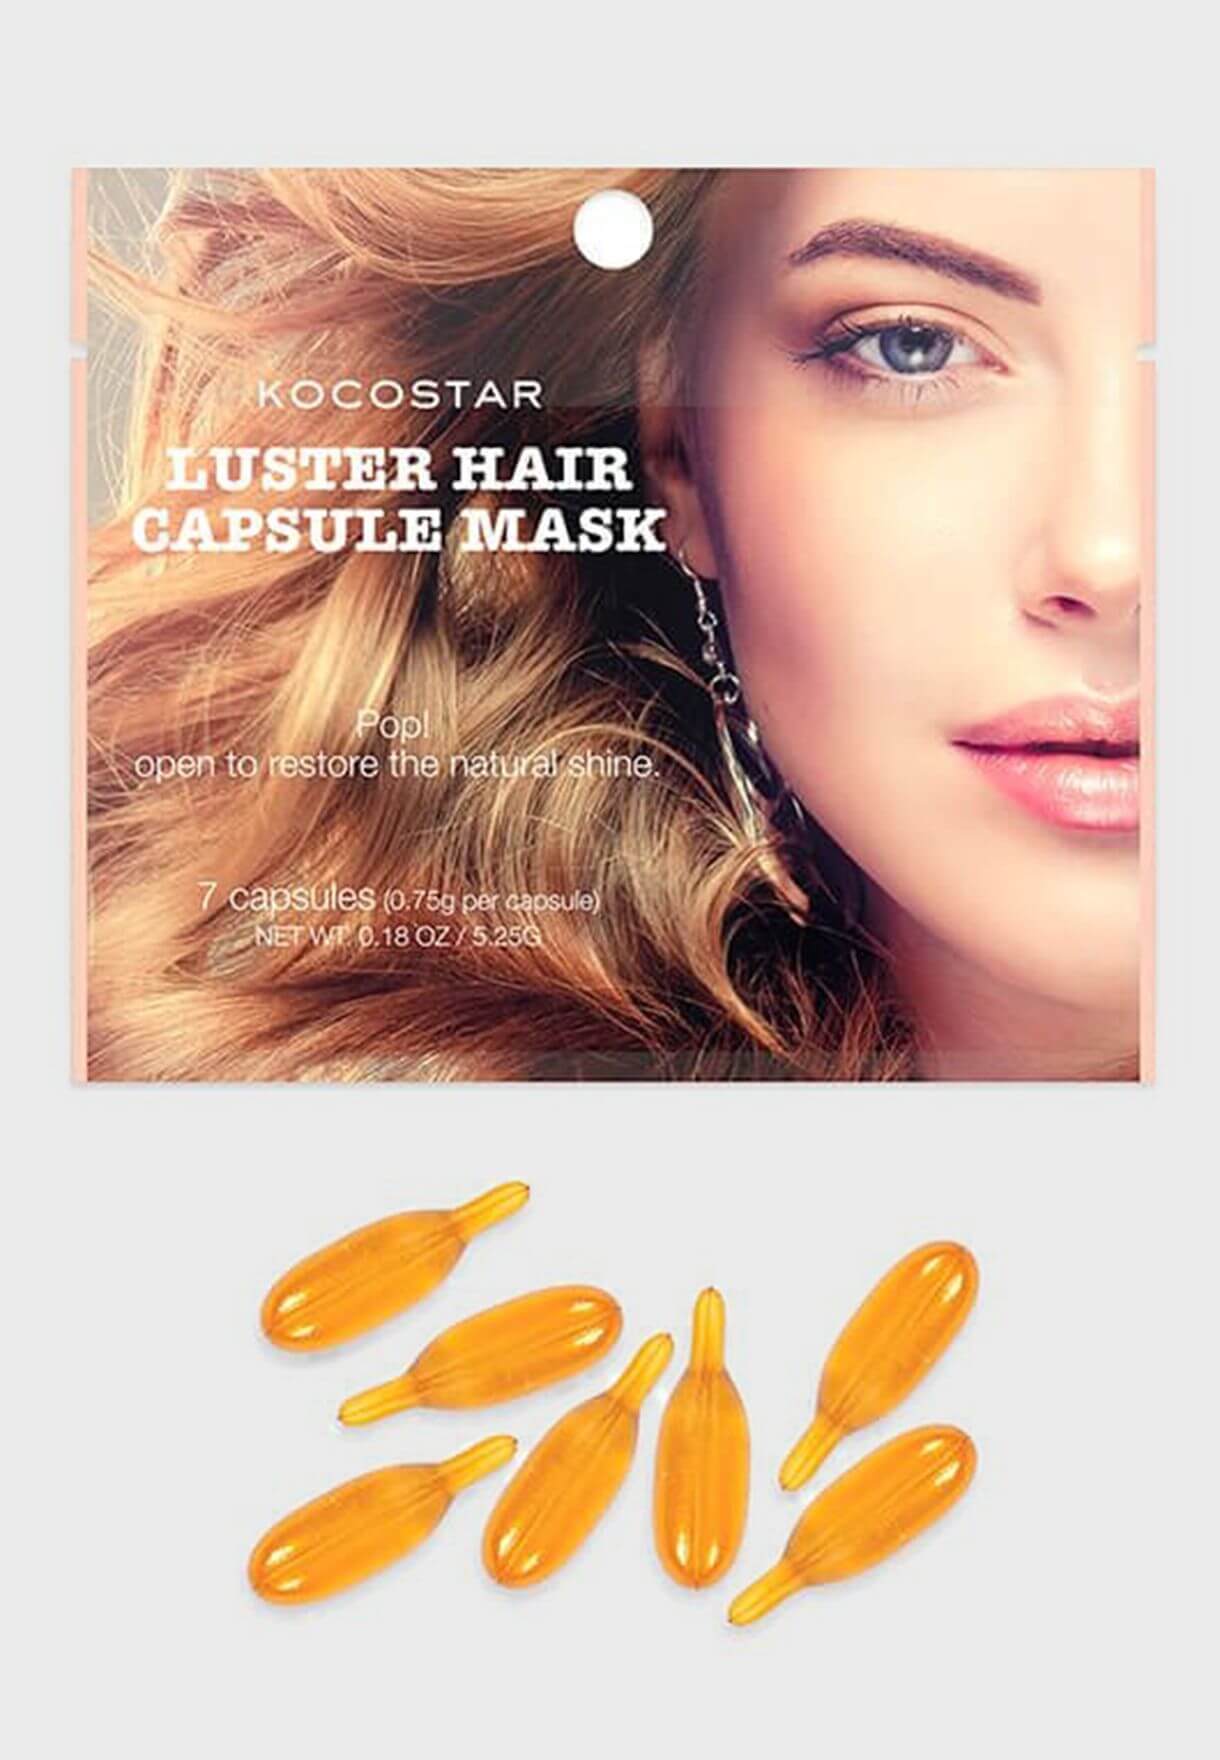 Kocostar Luster Hair Capsule Mask (5.25g x 7 Capsules)